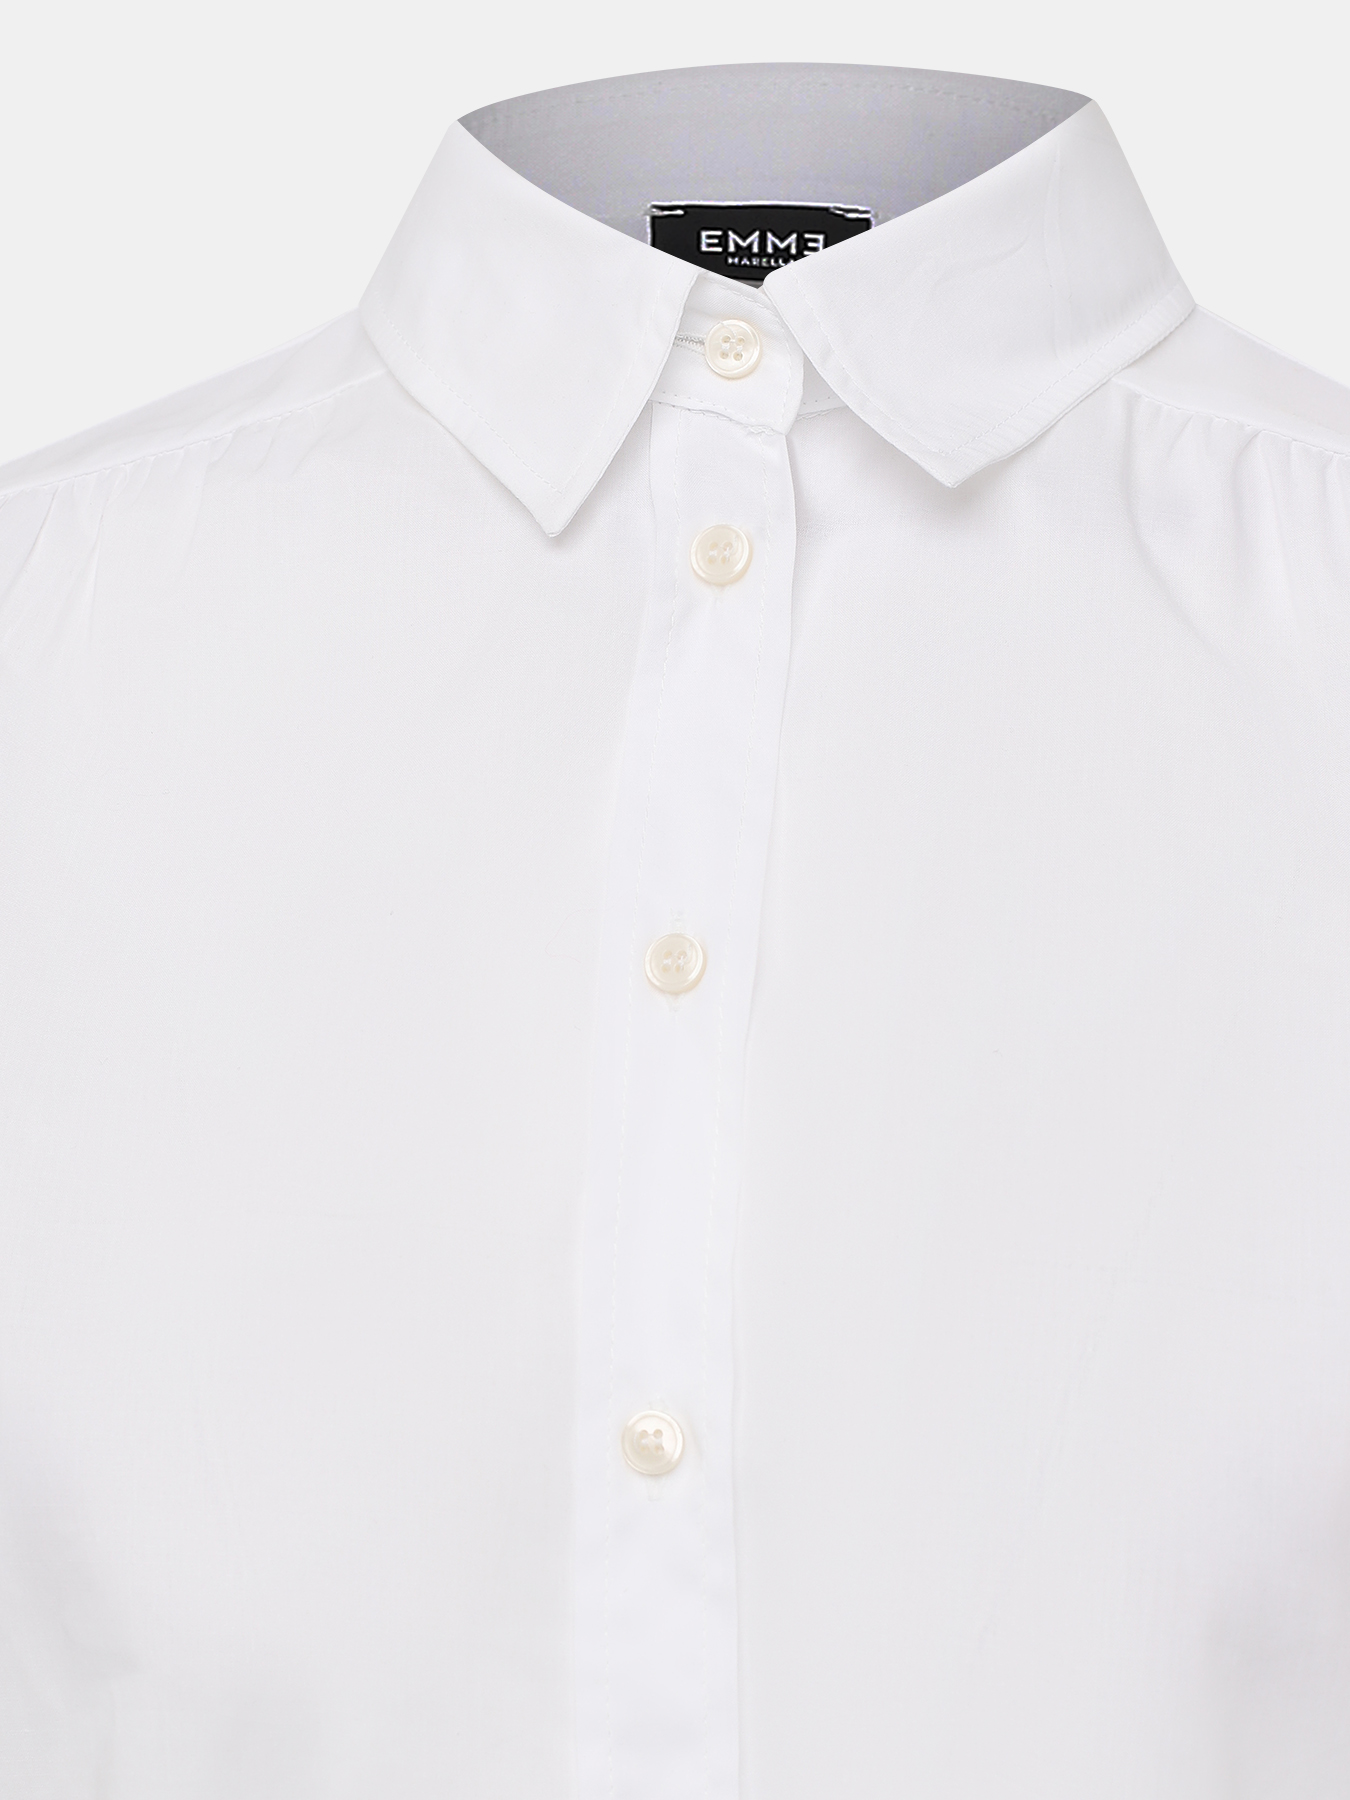 Блузка Fianco Emme Marella 422843-022, цвет белый, размер 44 - фото 3